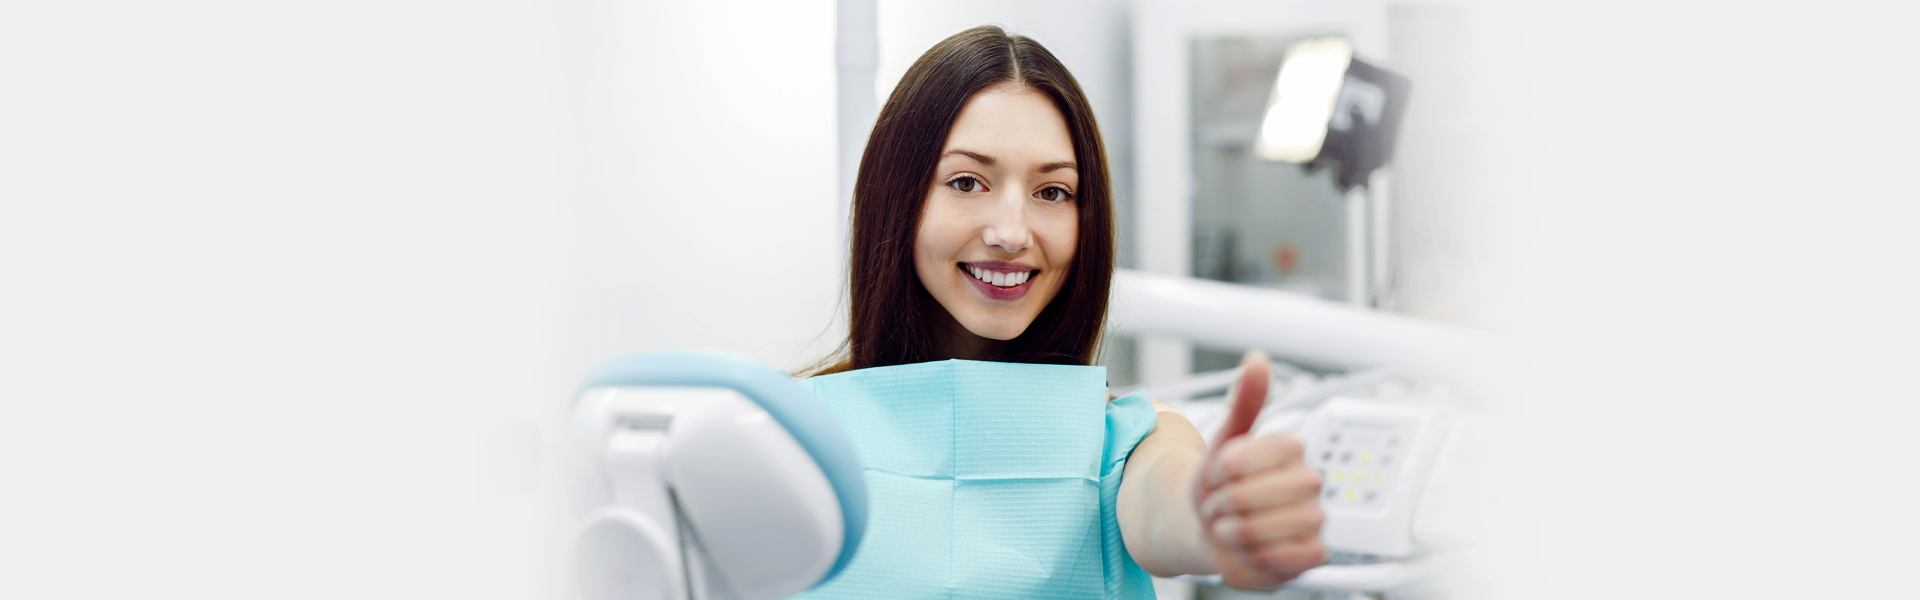 Top 4 Reasons You Need an Endodontics Treatment